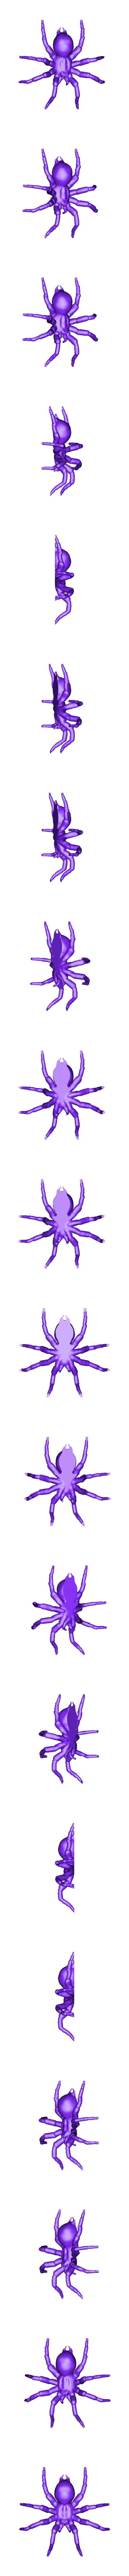 tarantula.obj Free STL file Spider・Model to download and 3D print, Pza4Rza